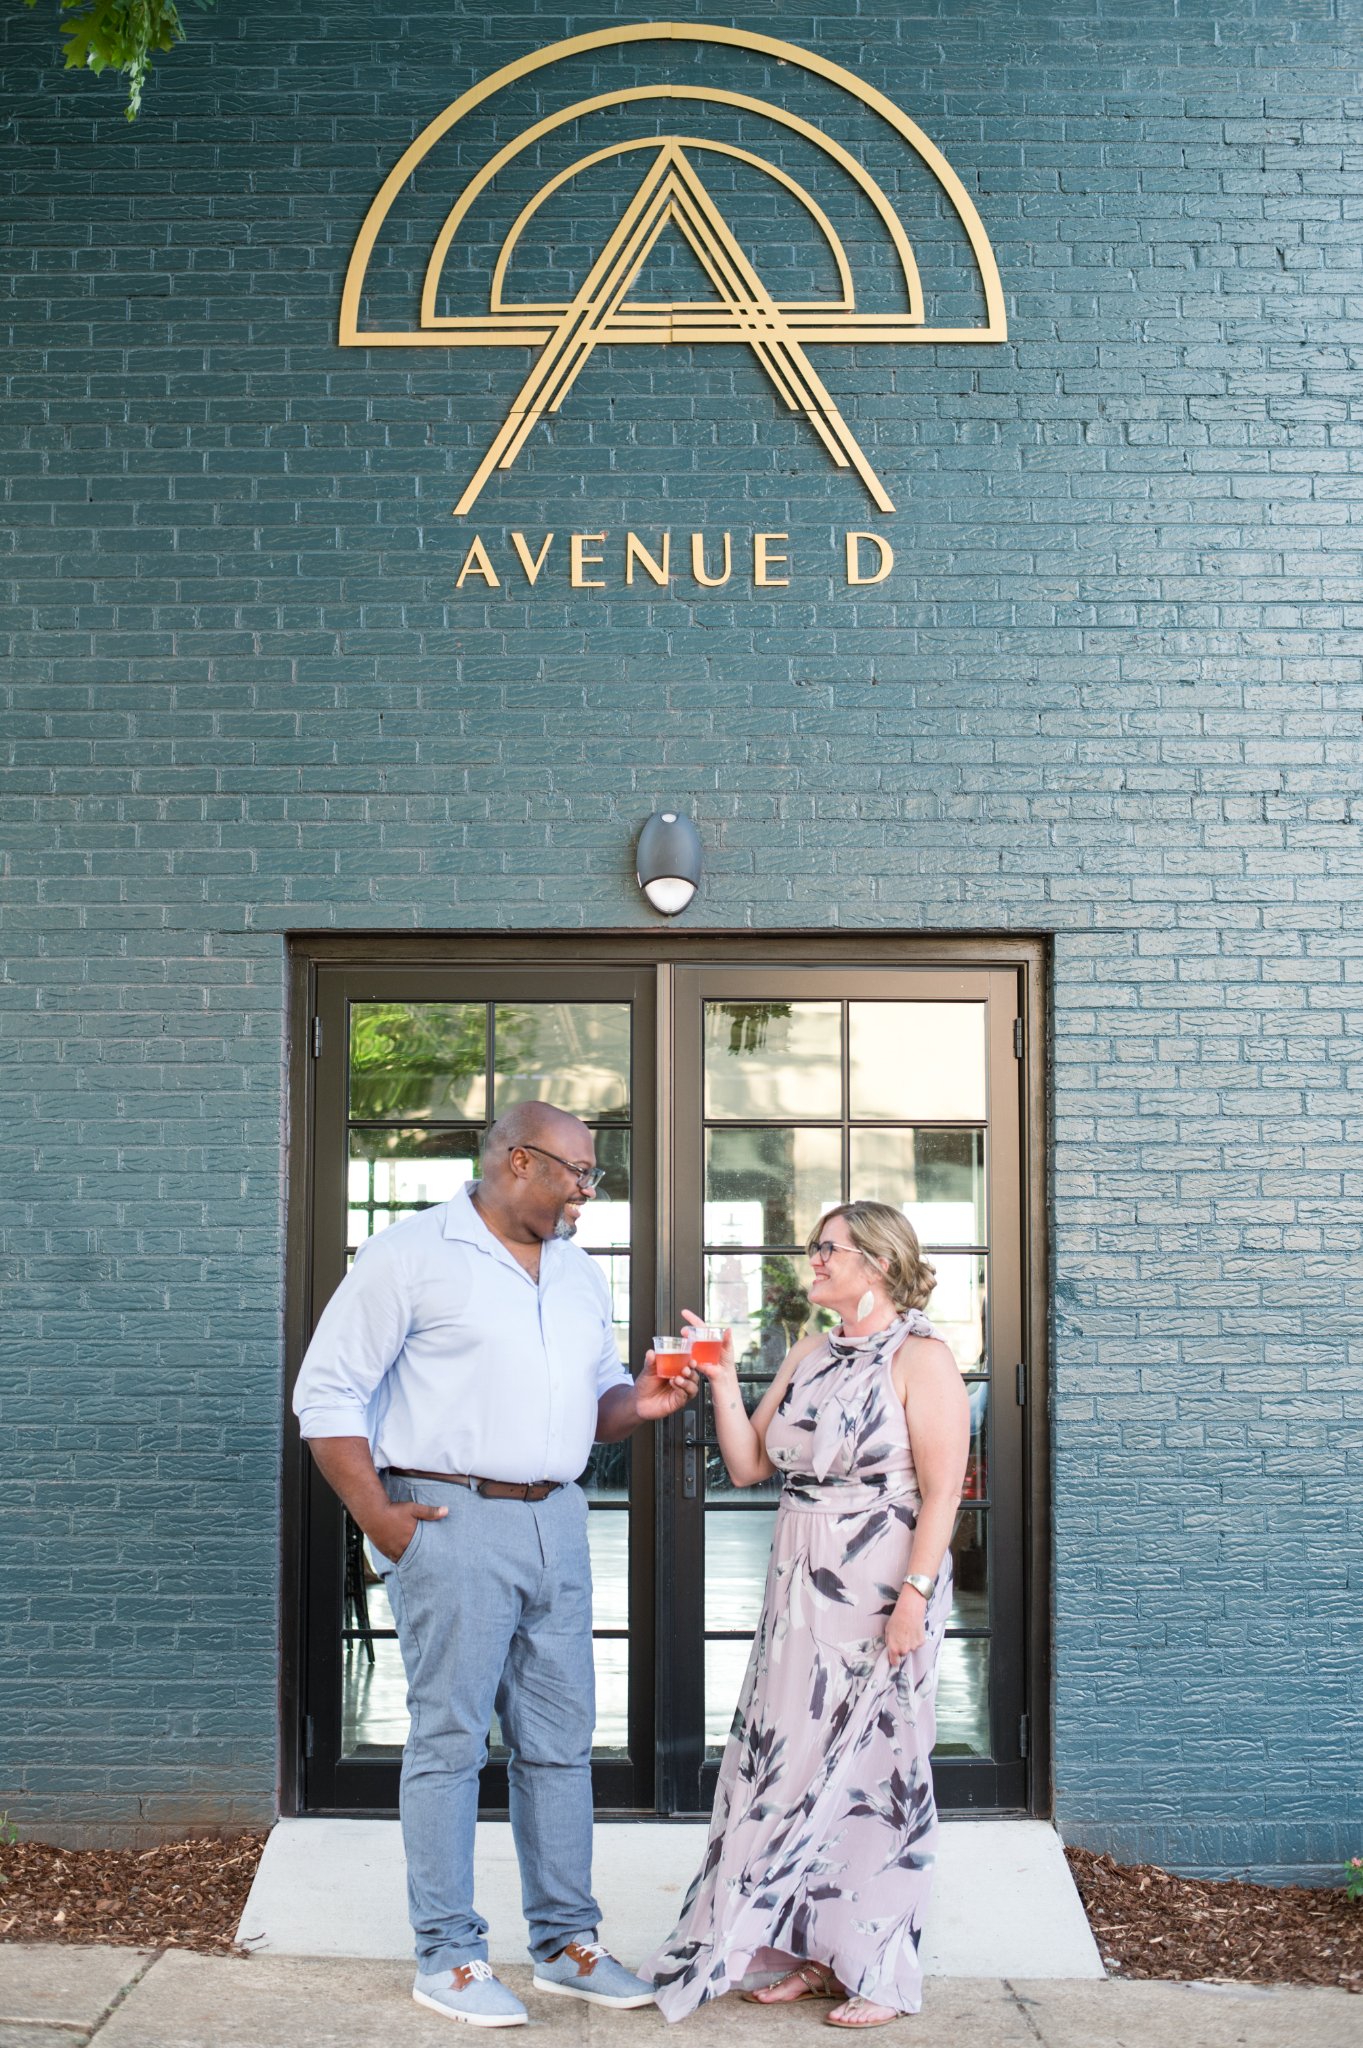 couple with bnb beverage management signature cocktails outside avenue d sign